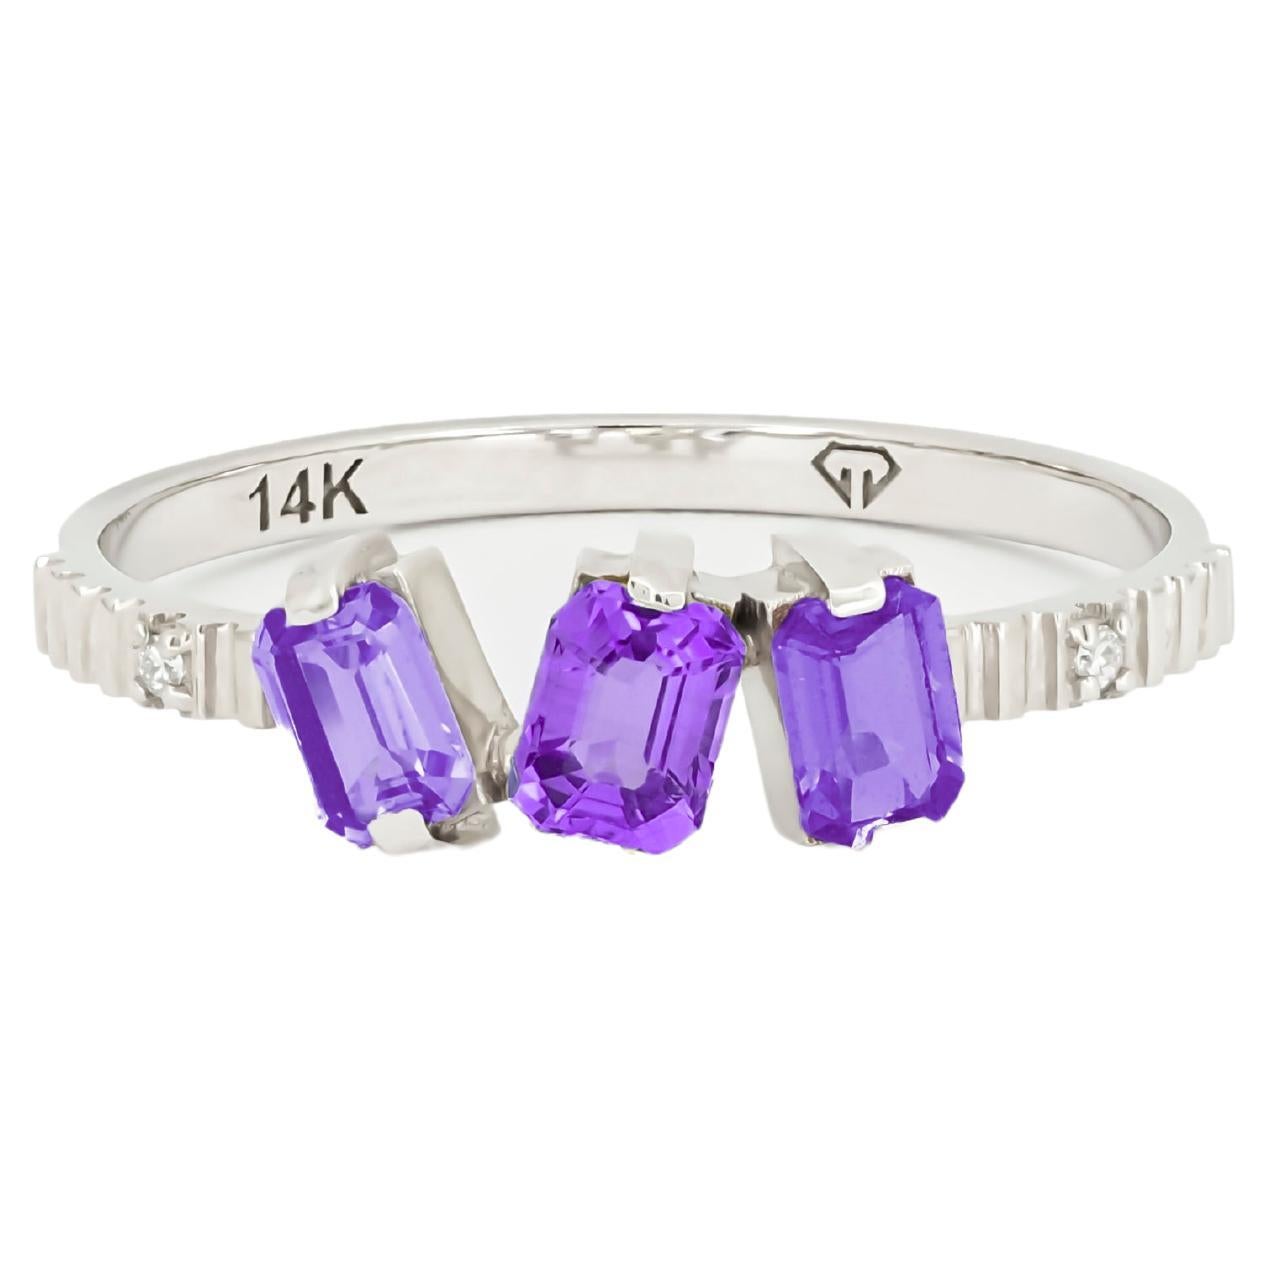 Monochrome purple gemstone 14k ring. 